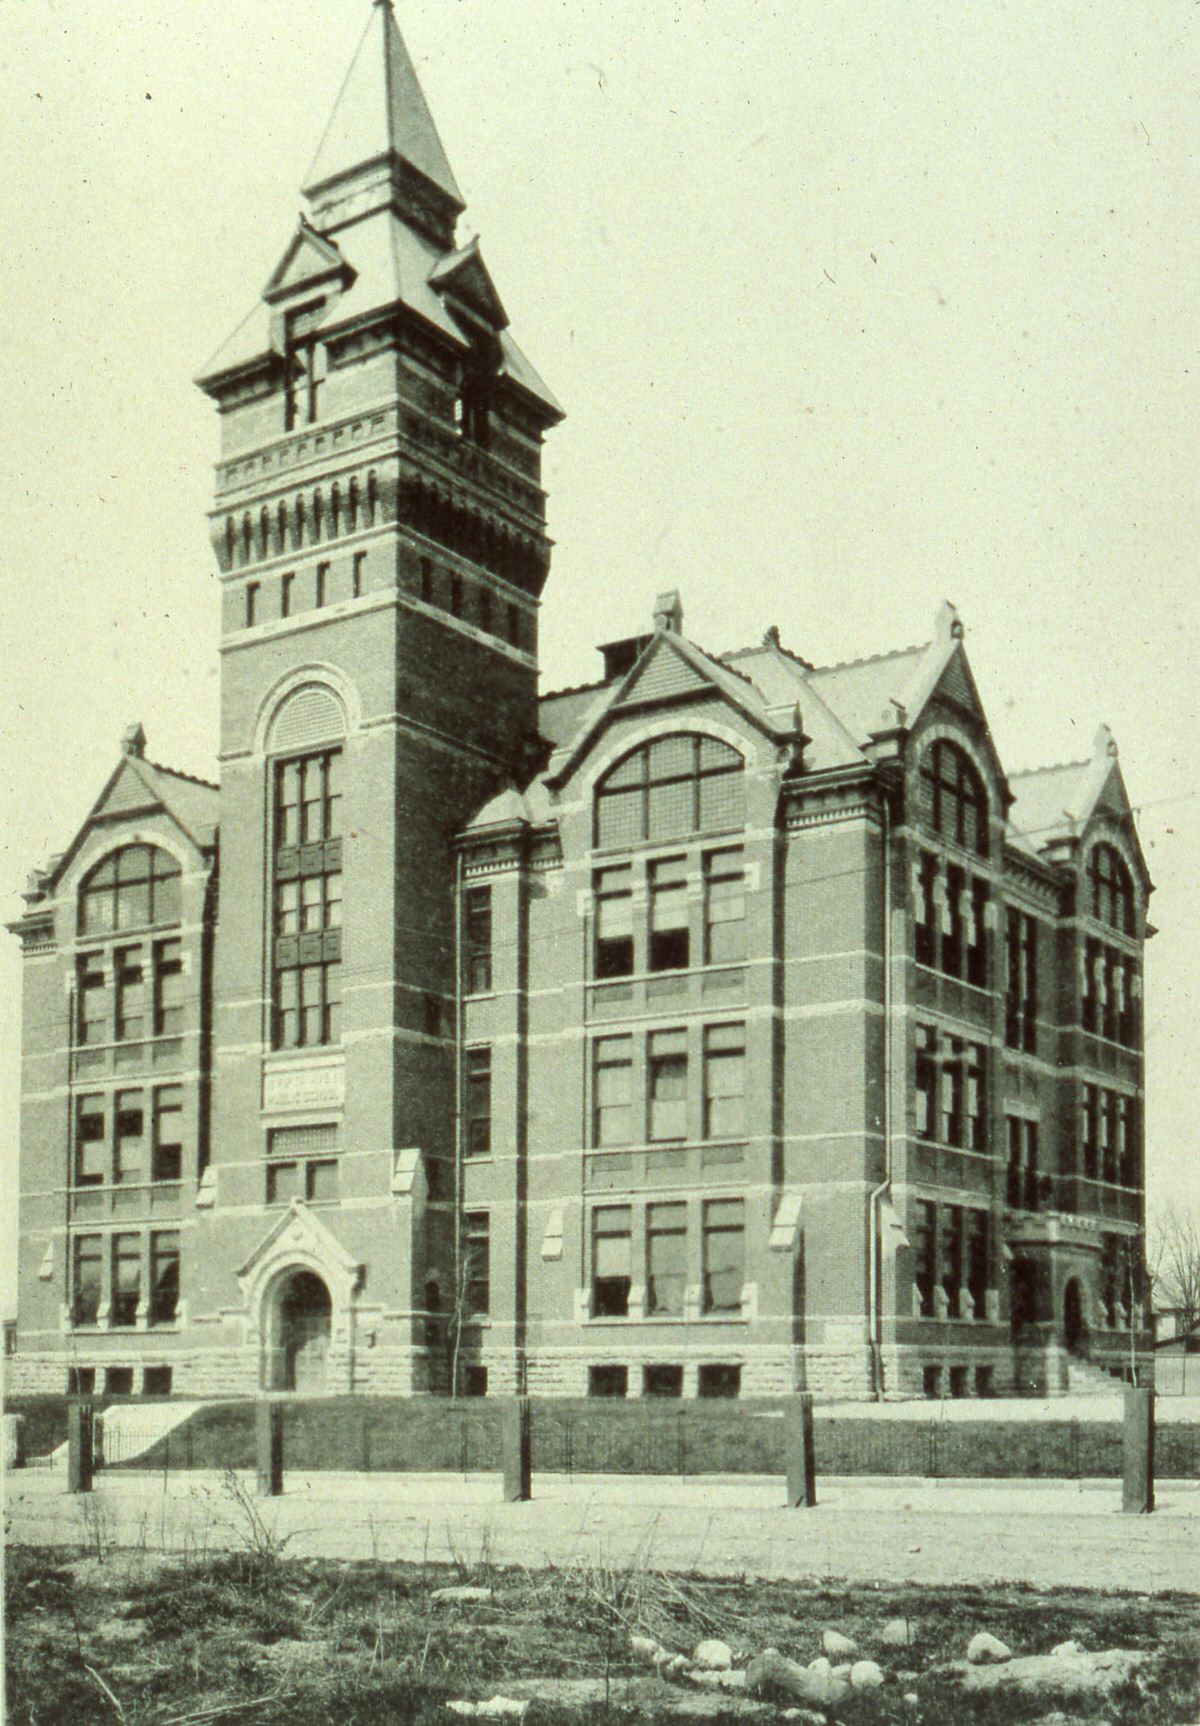 Fifth Avenue Elementary School, 1882